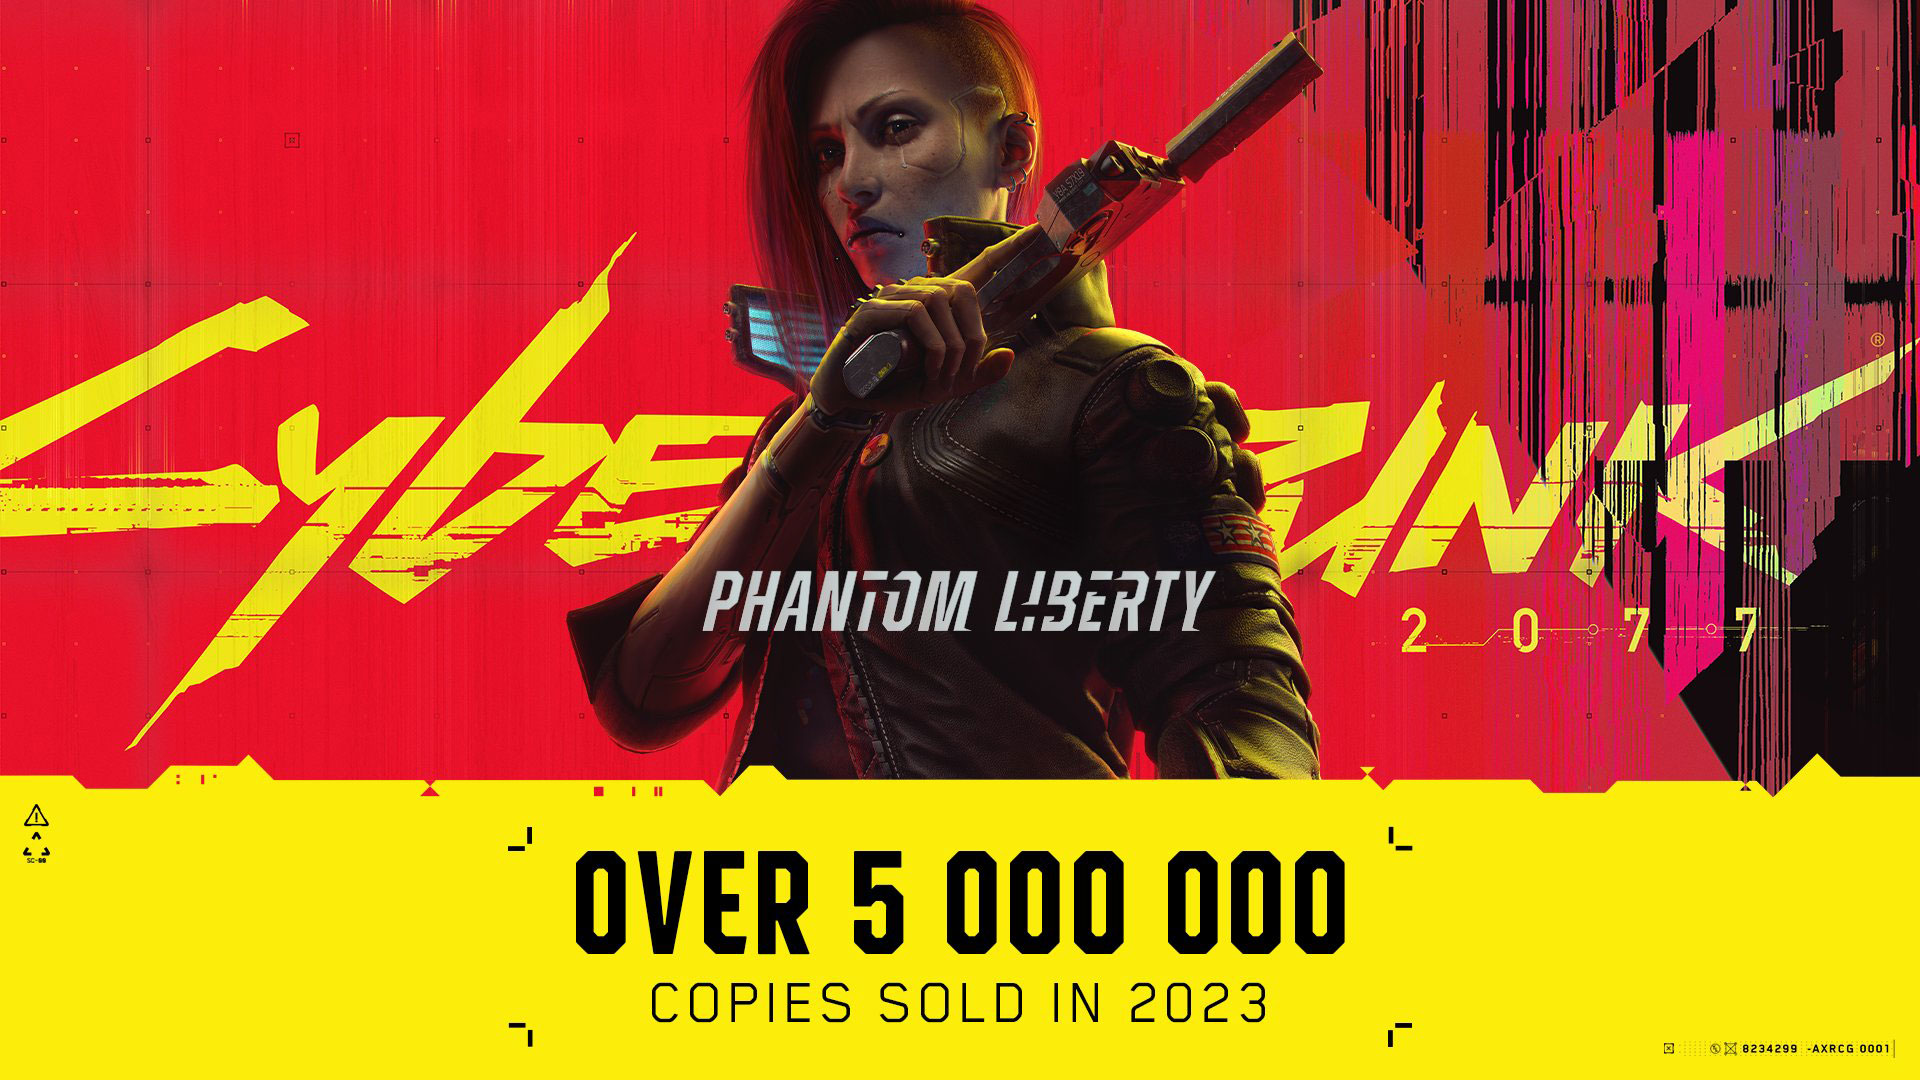 Cyberpunk 2077: Phantom Liberty has sold over five million units